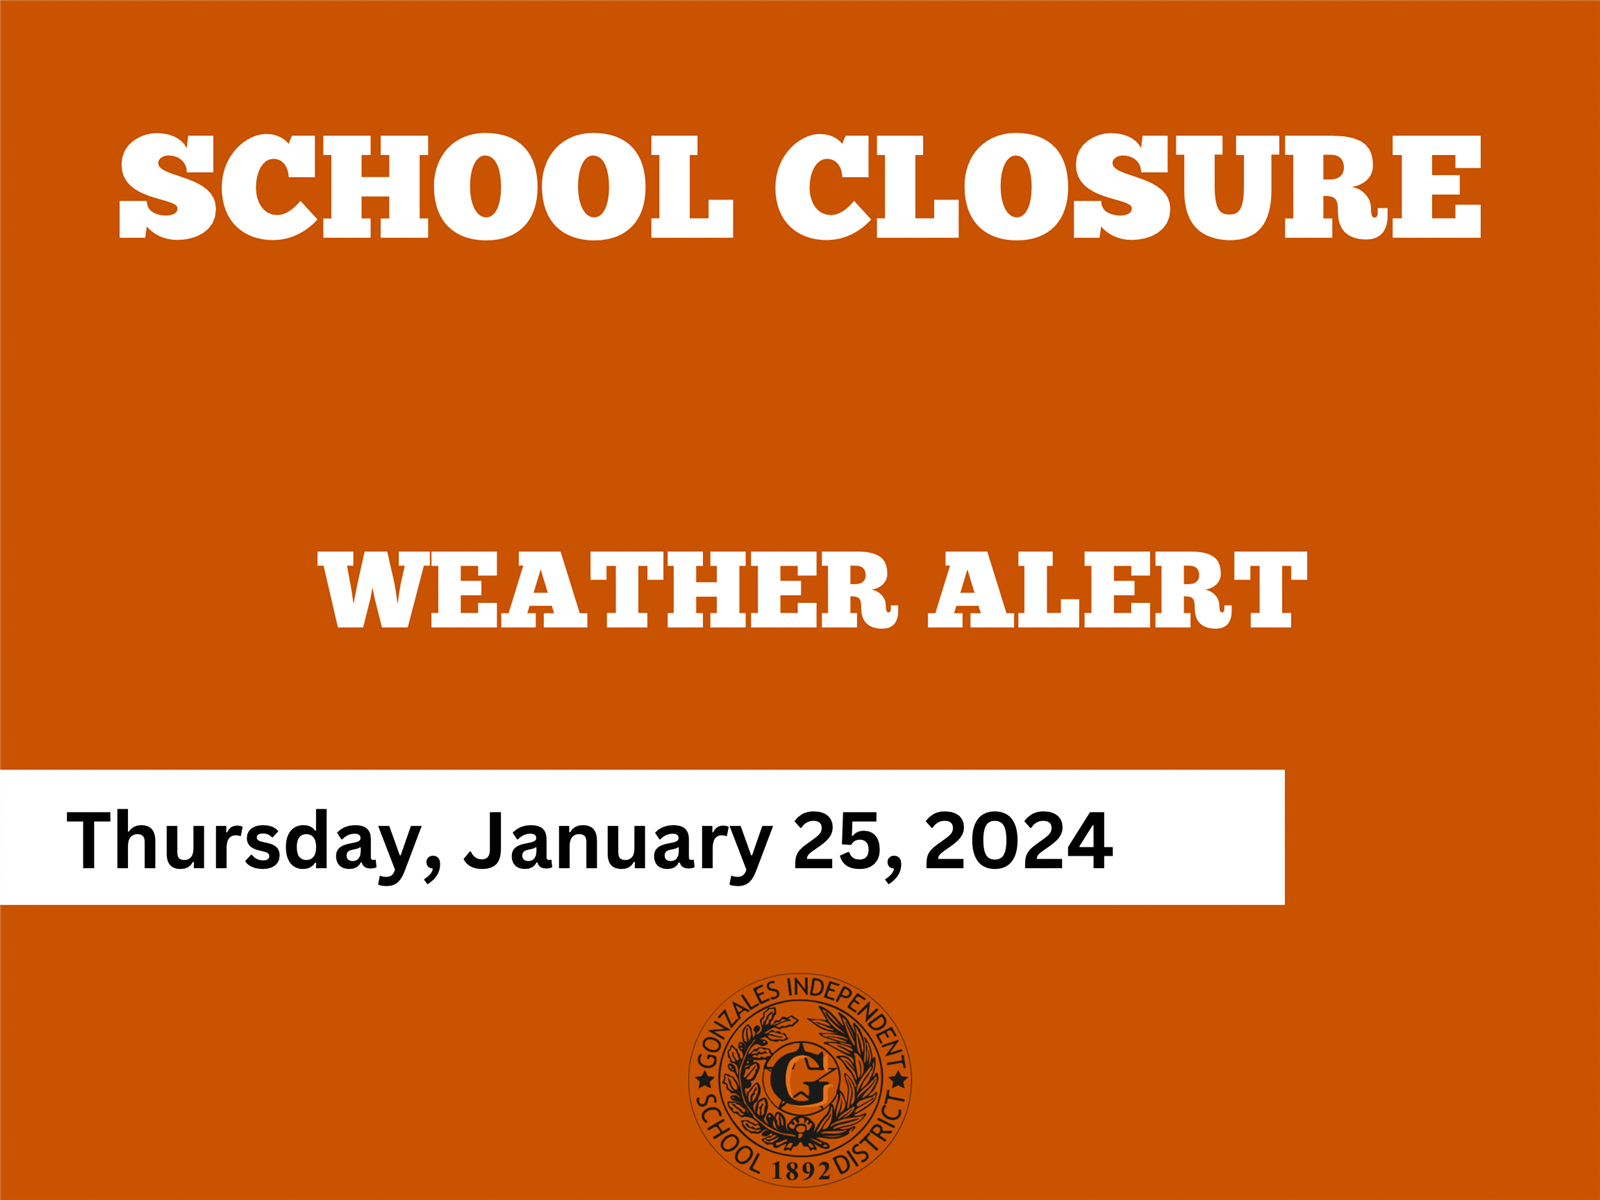 School Closure- Thursday, January 25, 2024